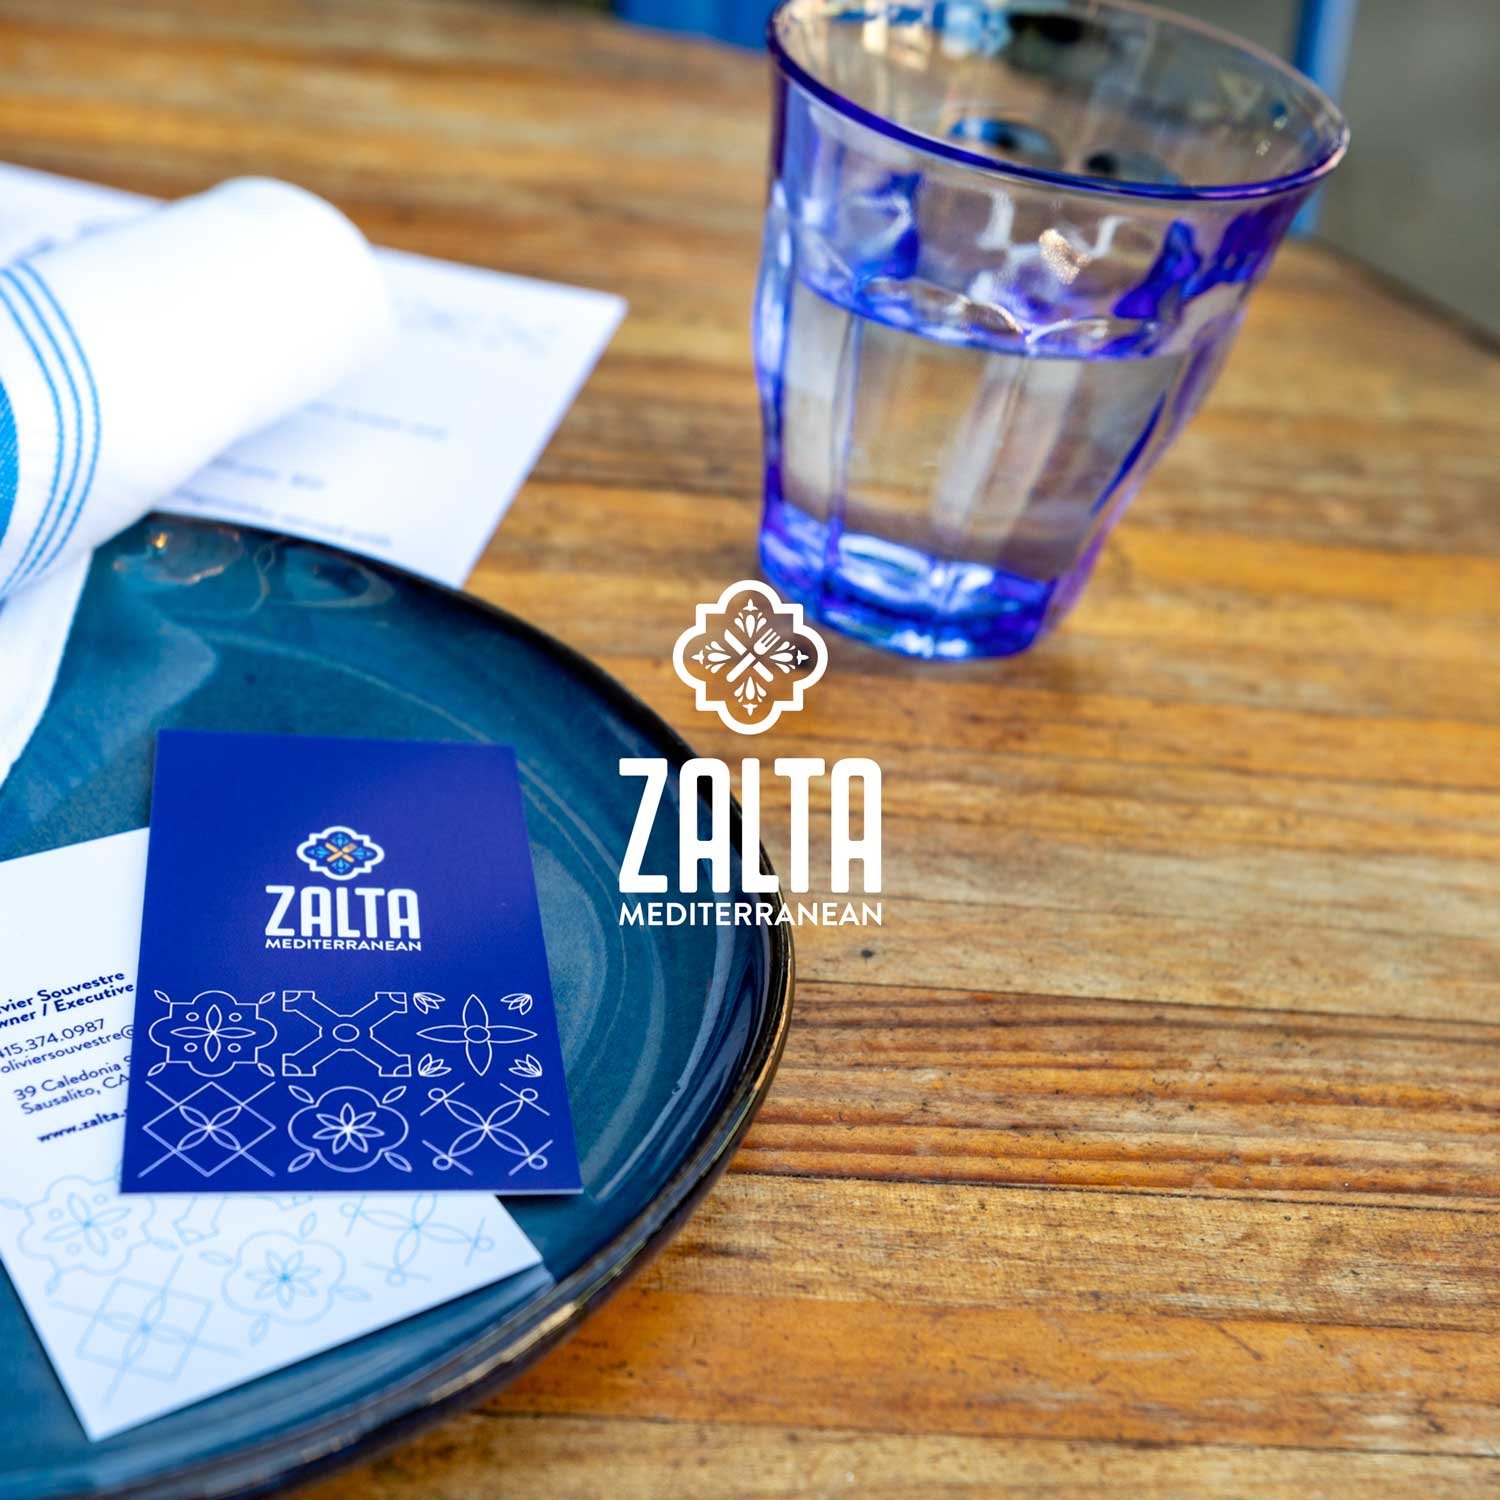 Zalta -Best Mediterranean Restaurant in Marin County. Full bar, cocktails and wine. Gluten-free and vegan options. Kids welcome.